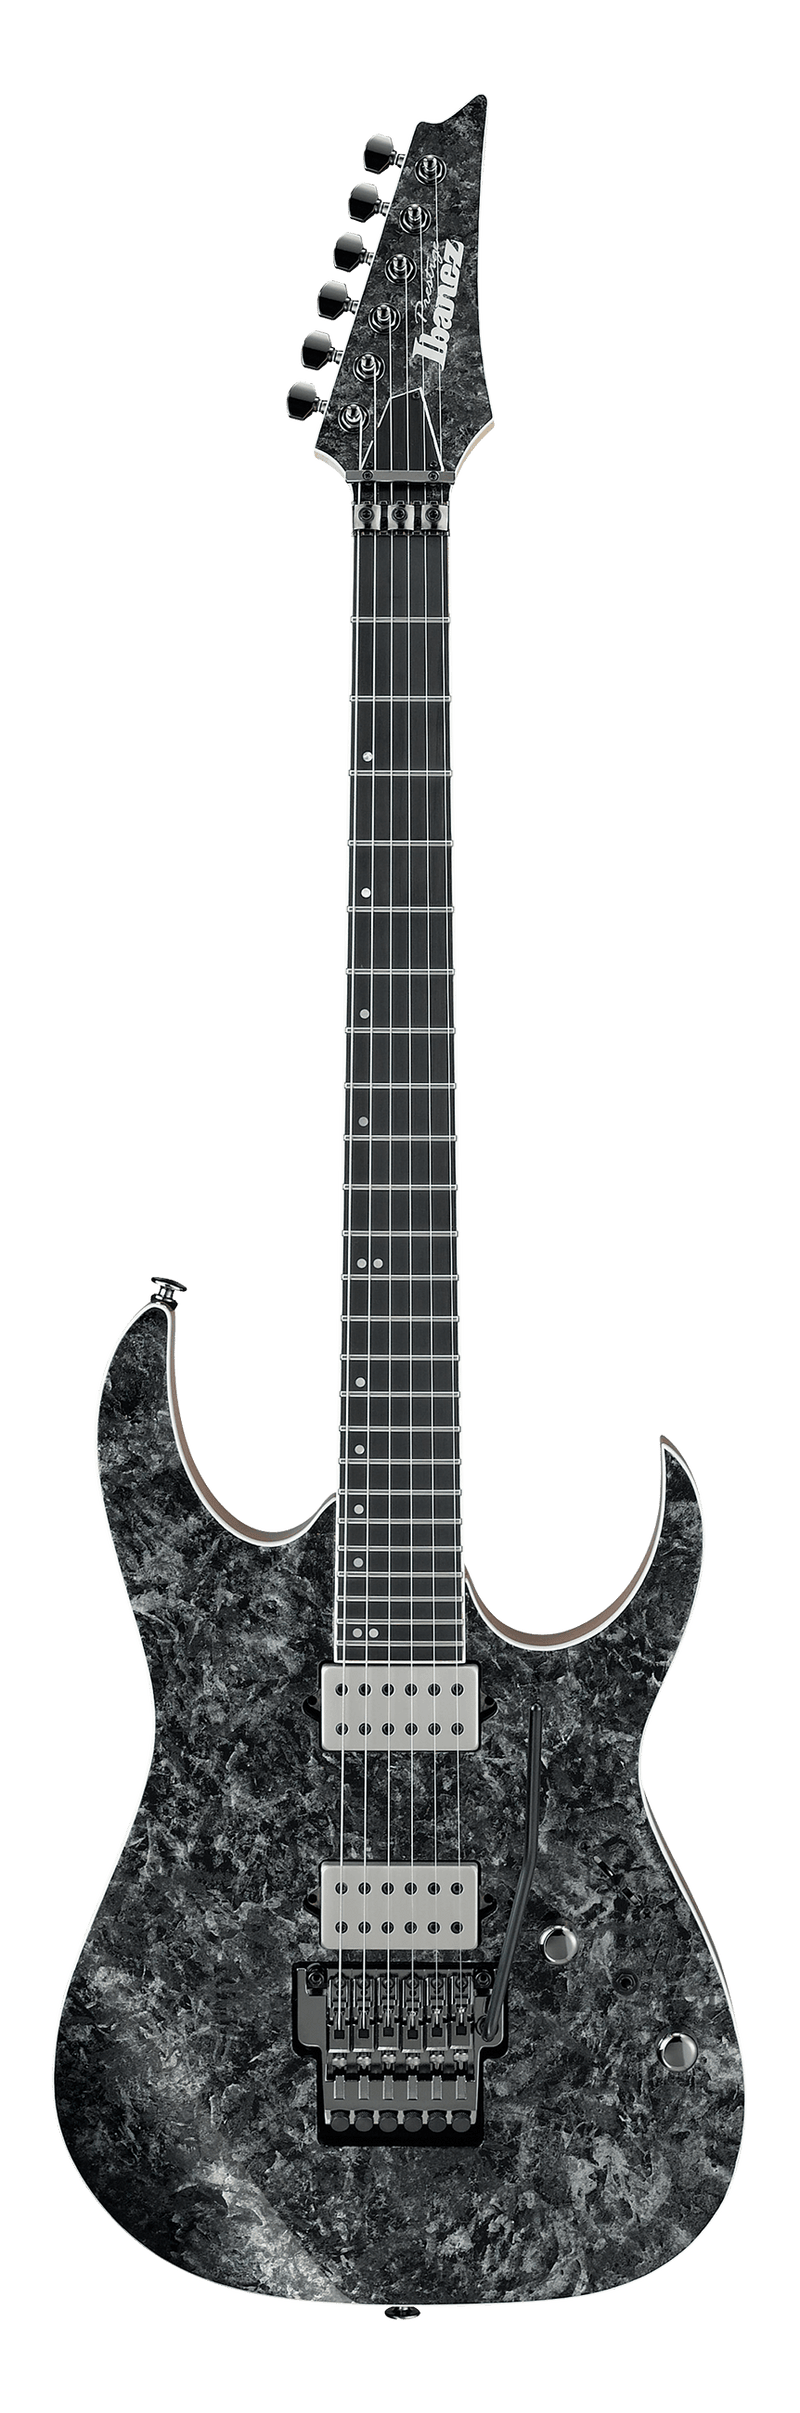 Ibanez RG5320-CSW - Guitare électrique avec micros DiMarzio - Cosmic Shadow